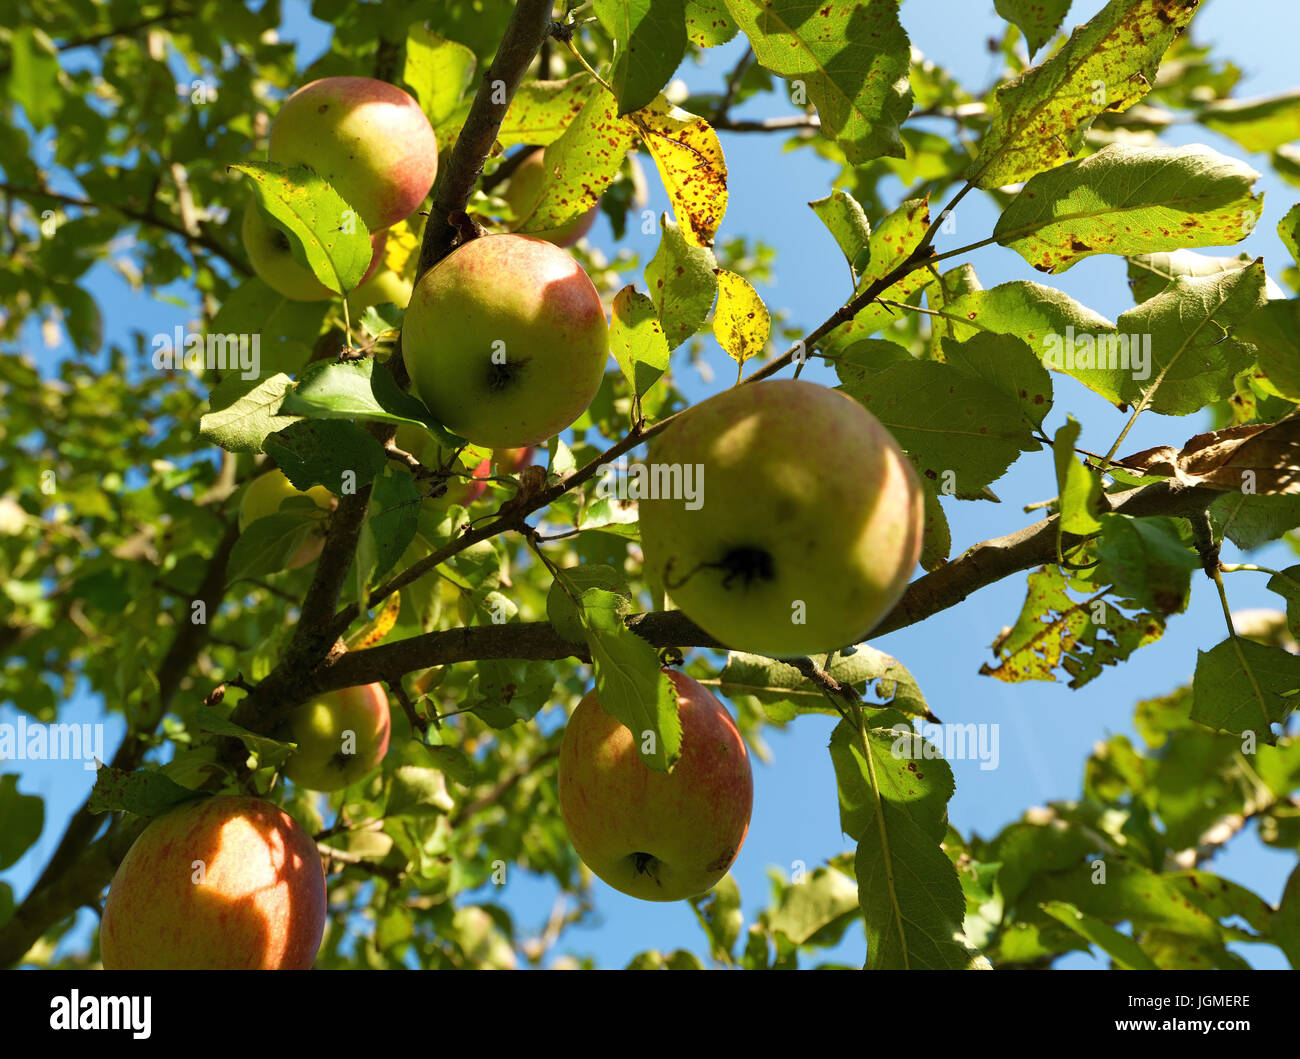 apples hang on a tree - Apples on a tree, Äpfel hängen auf einem Baum - Apples on a tree Stock Photo